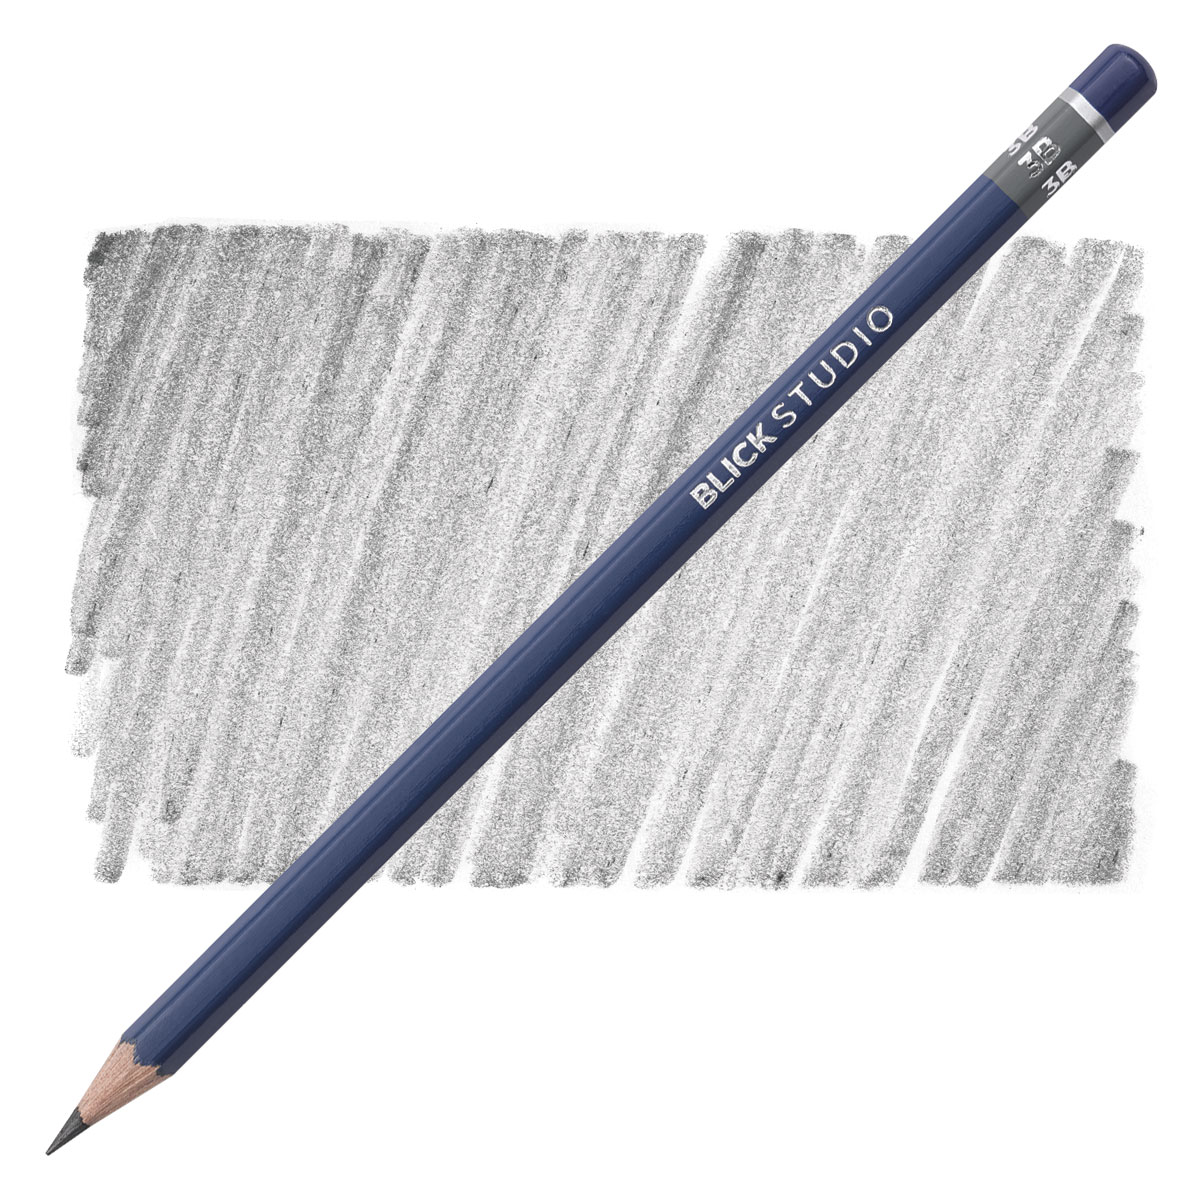 3b drawing pencil